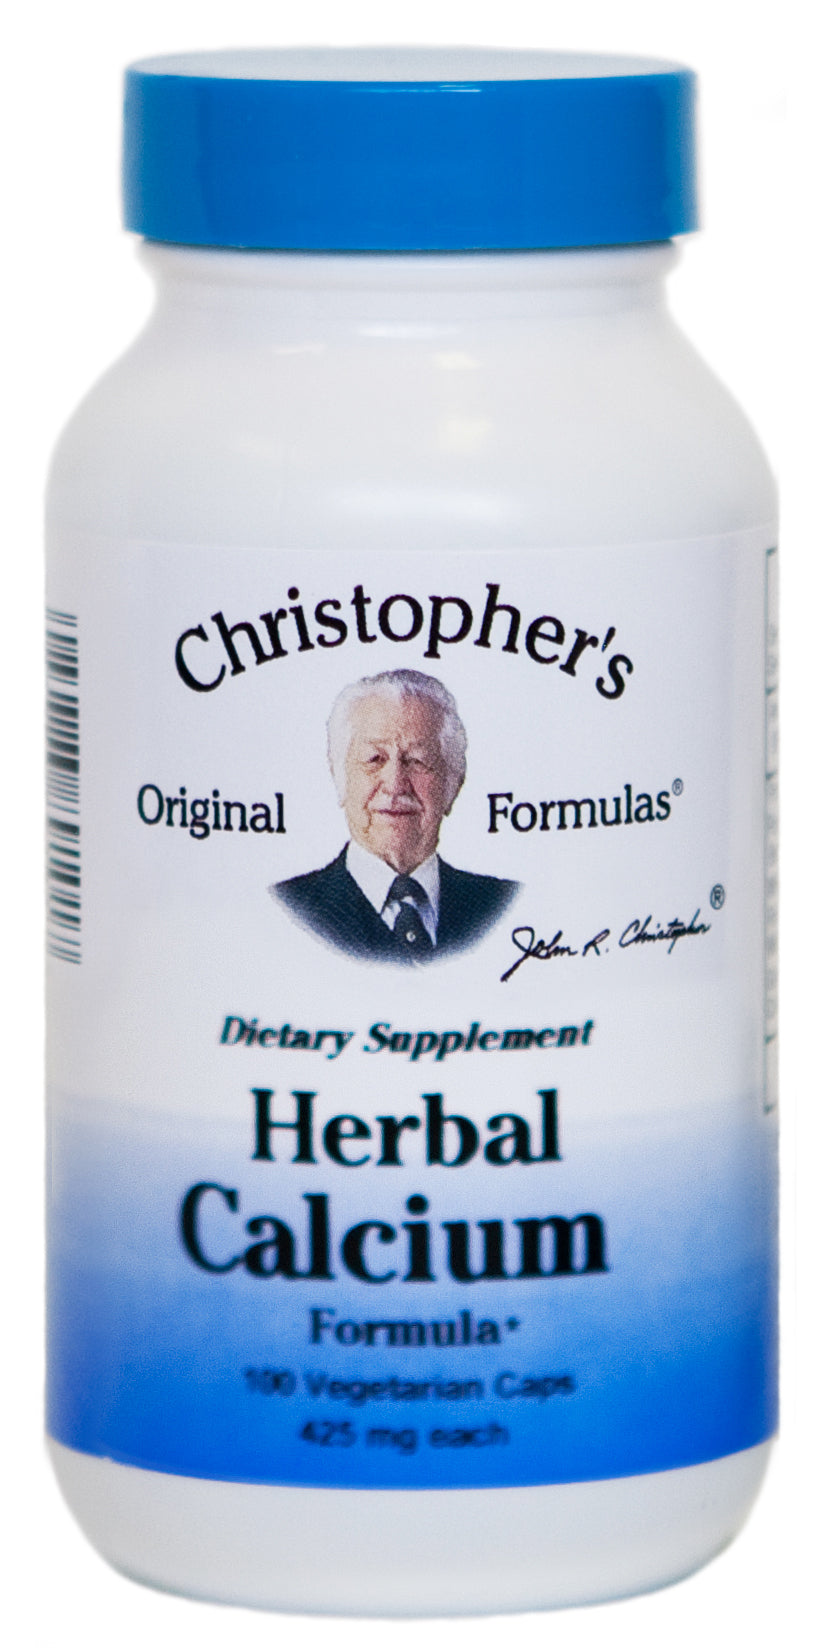 Dr. Christopher's Herbal Calcium Formula